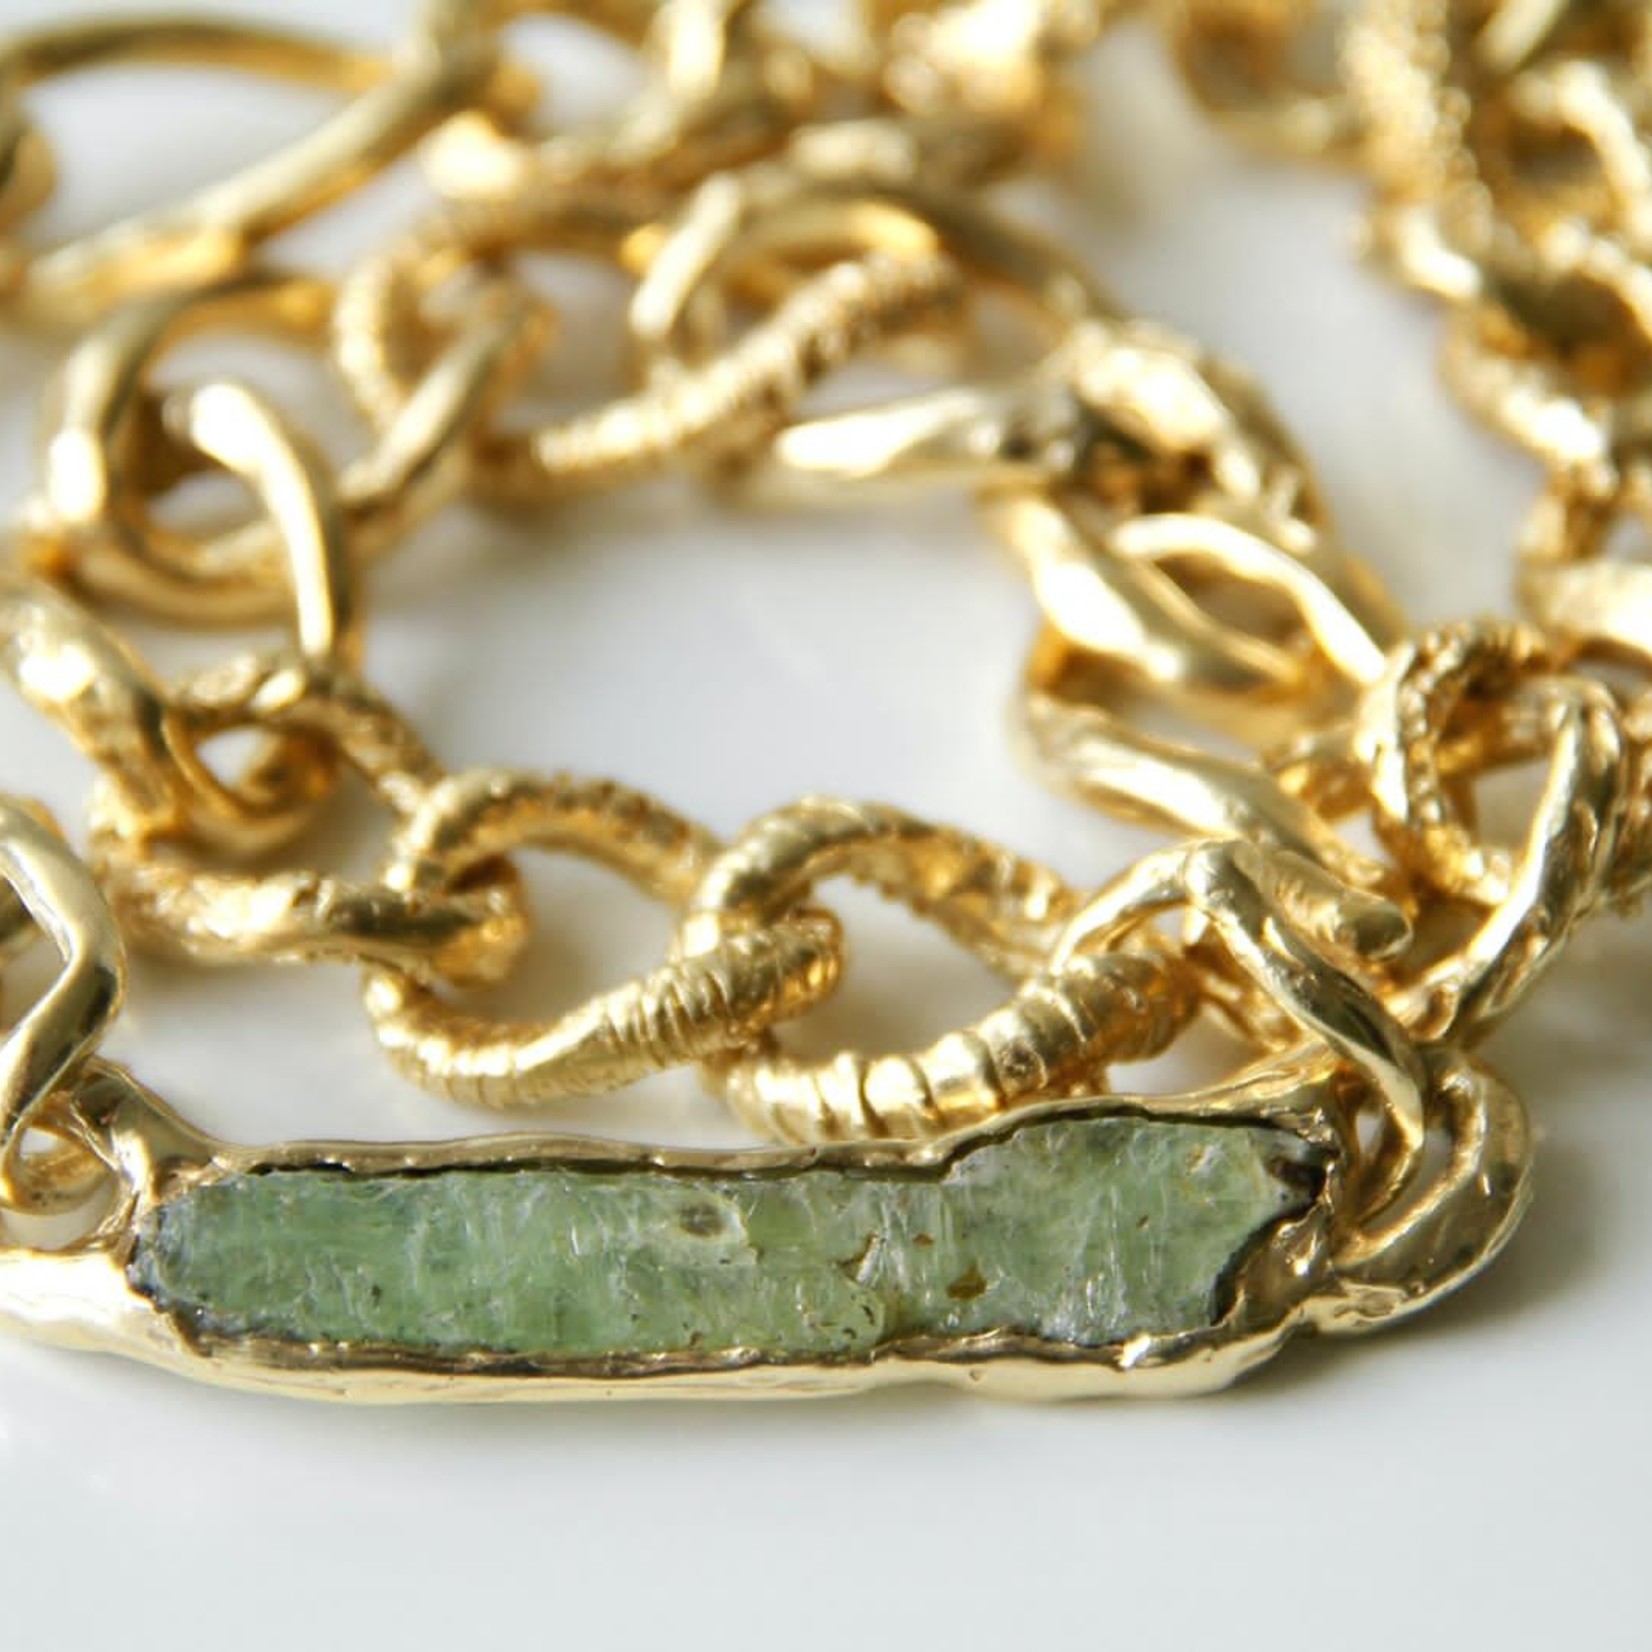 Argent tonic Golden Chain kyanite necklace